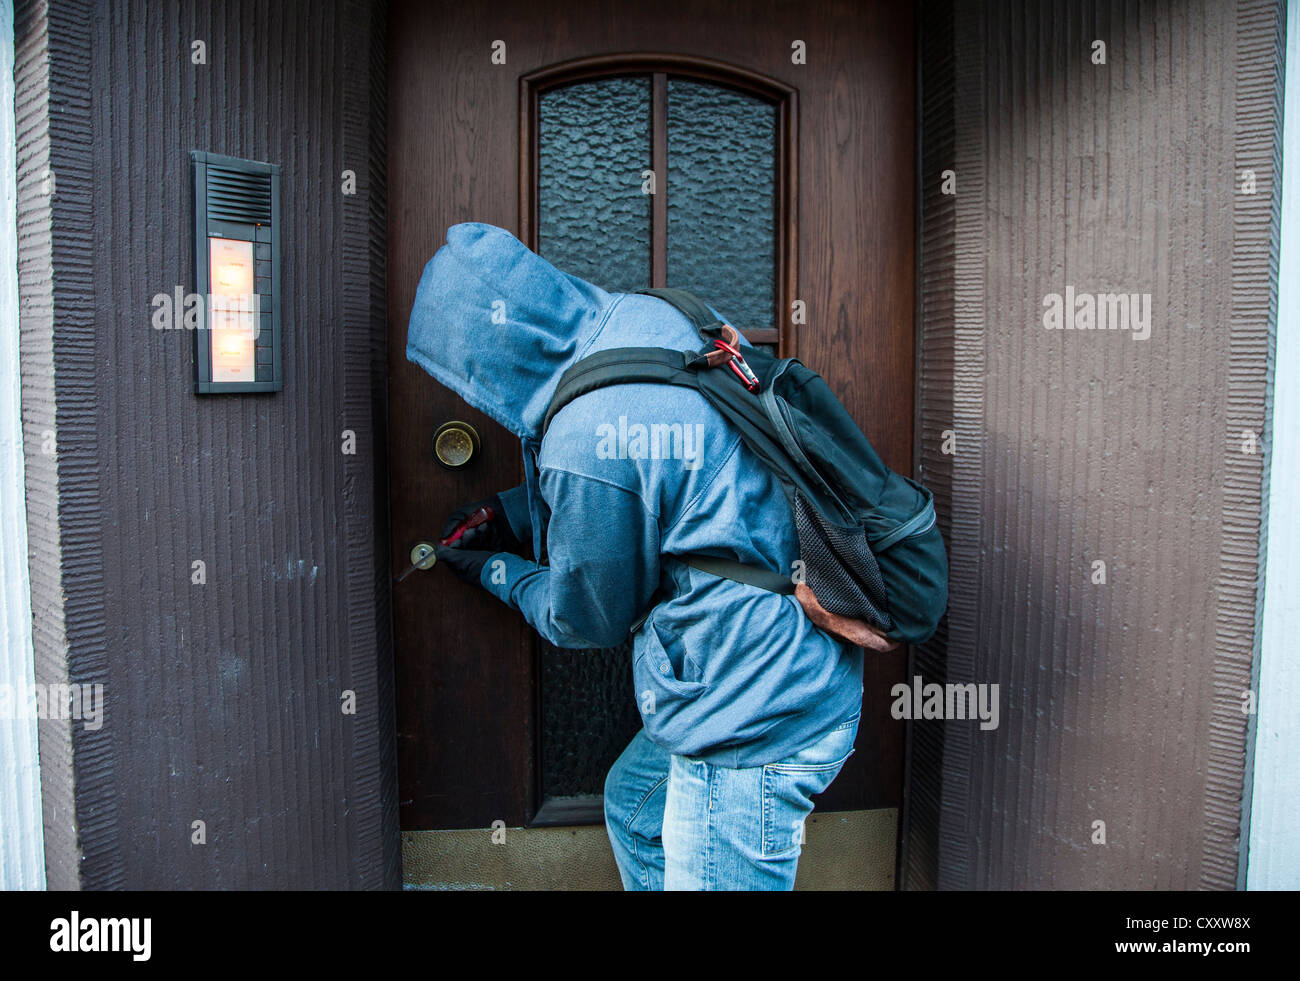 Burglar breaks into an apartment. Symbol image. Stock Photo